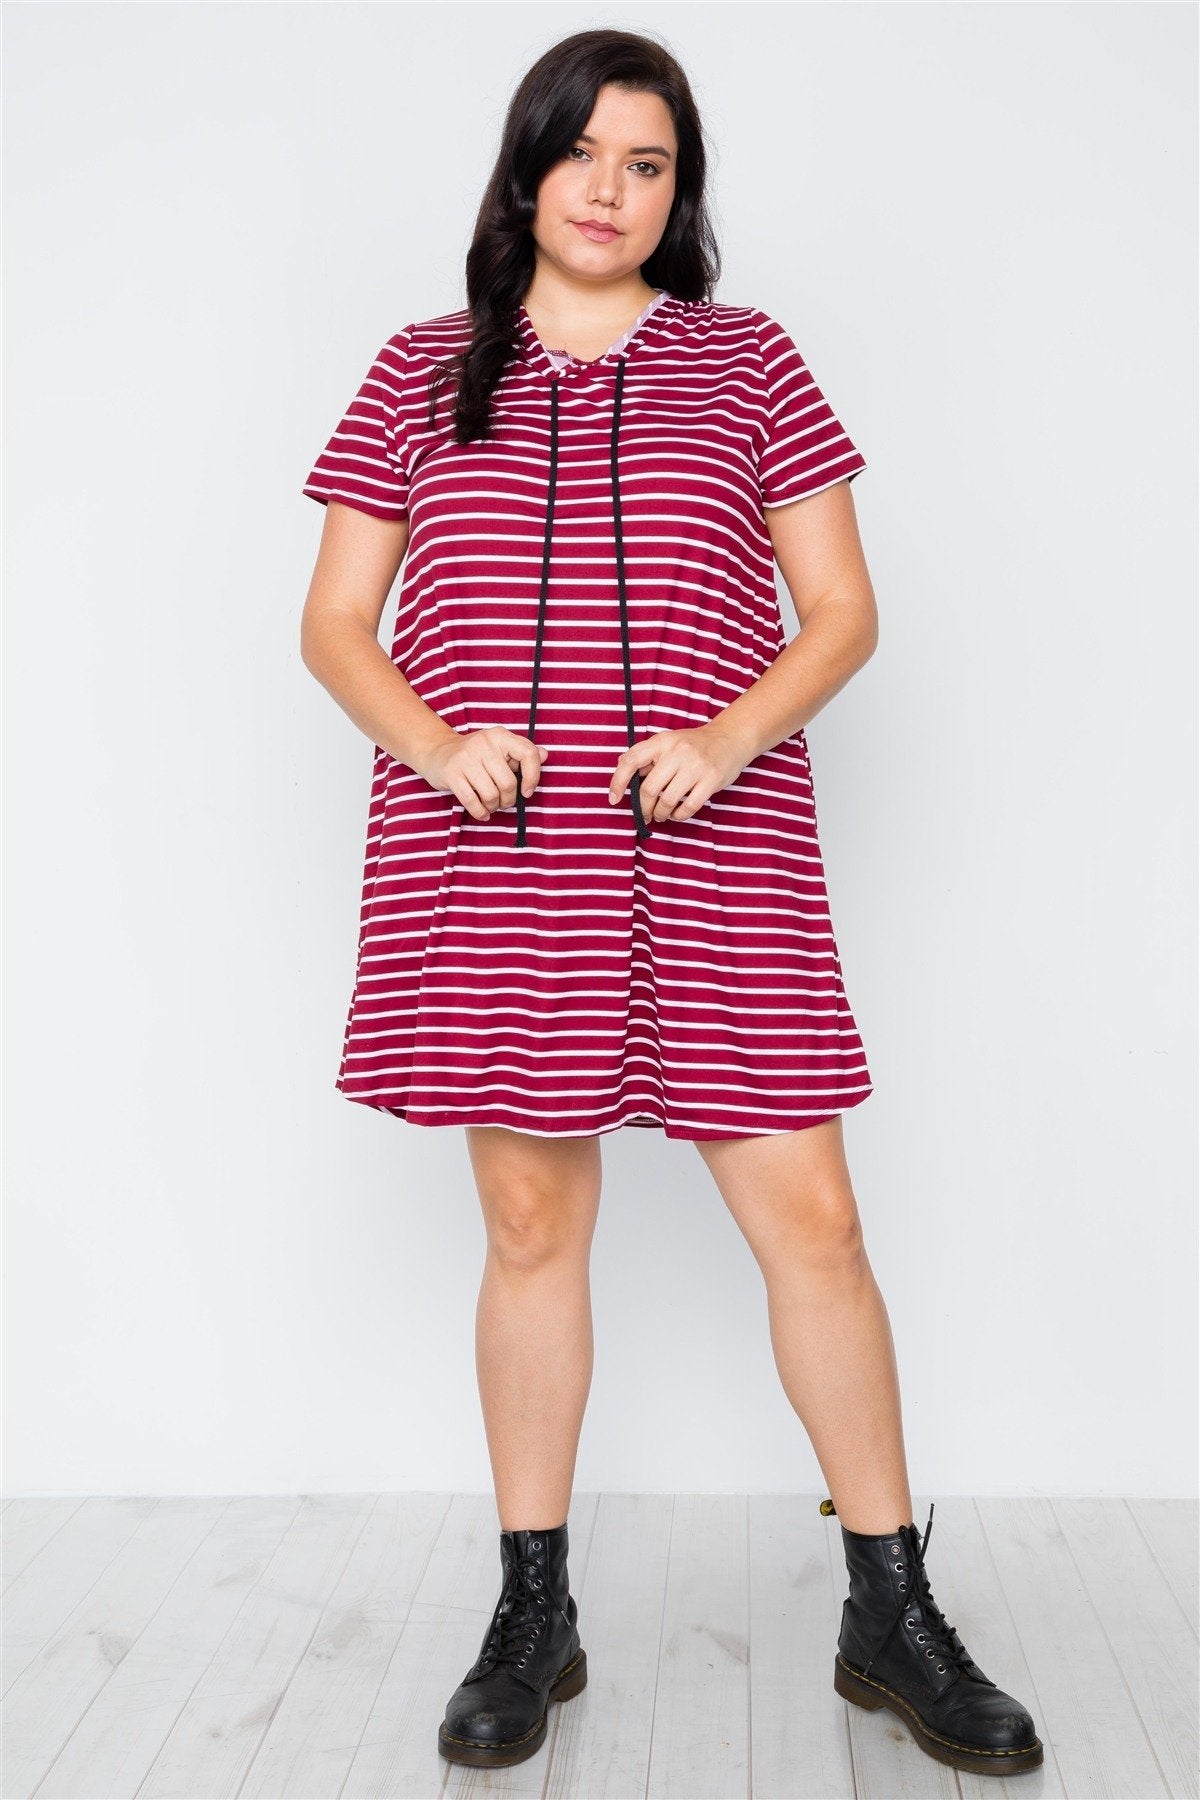 Stripe Hooded Shirt Mini Dress